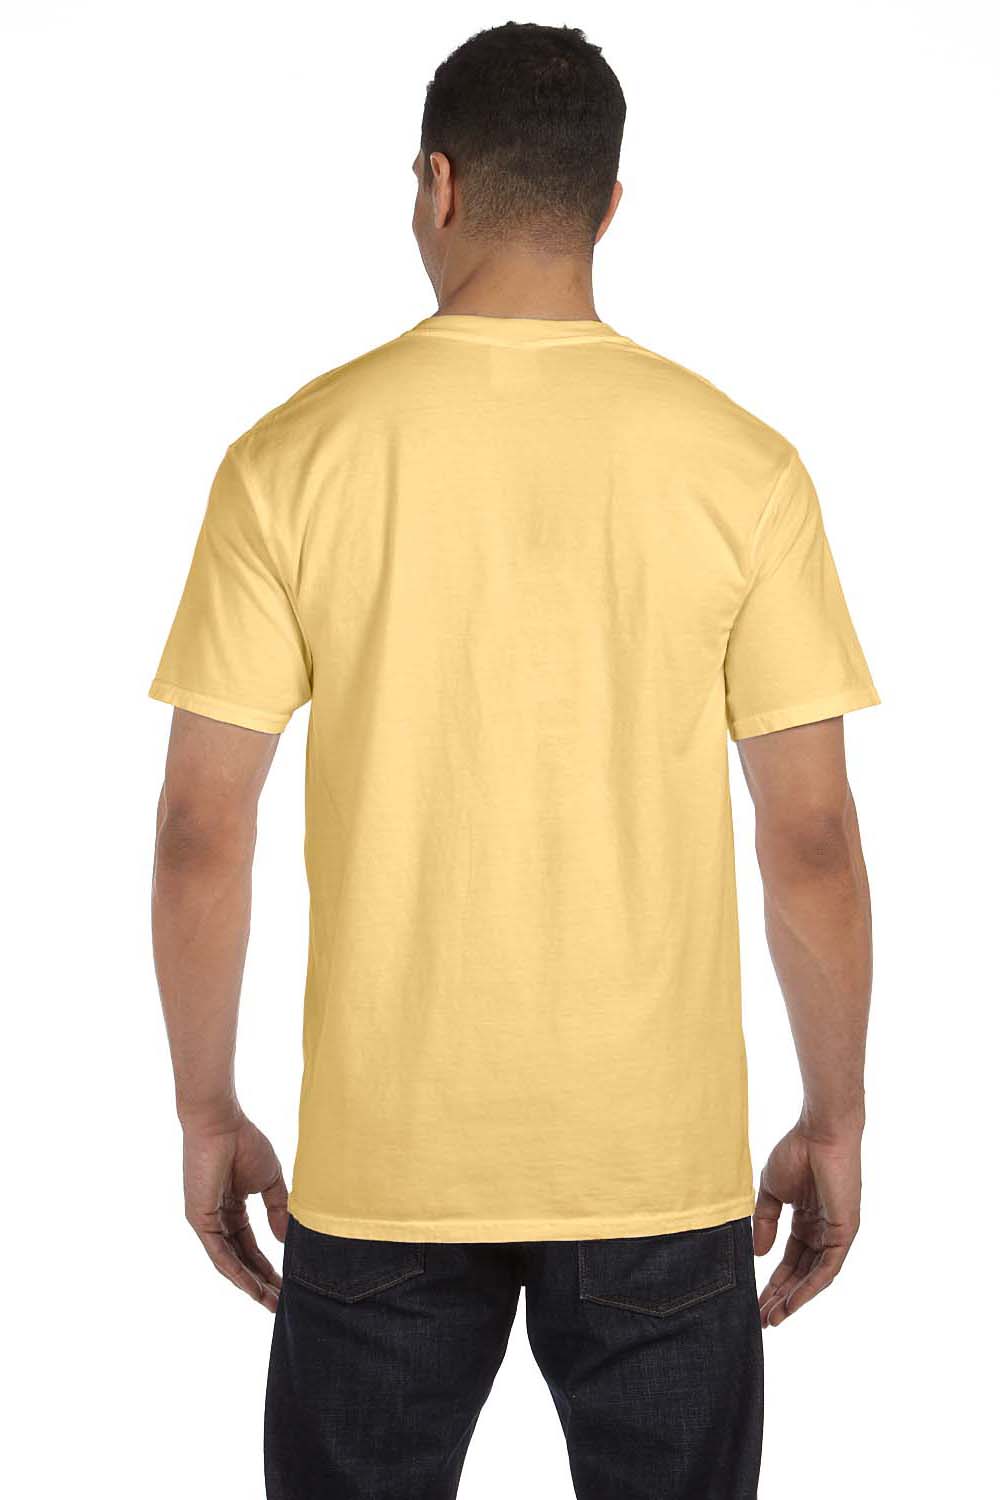 Comfort Colors 6030CC Mens Short Sleeve Crewneck T-Shirt w/ Pocket Butter Yellow Back